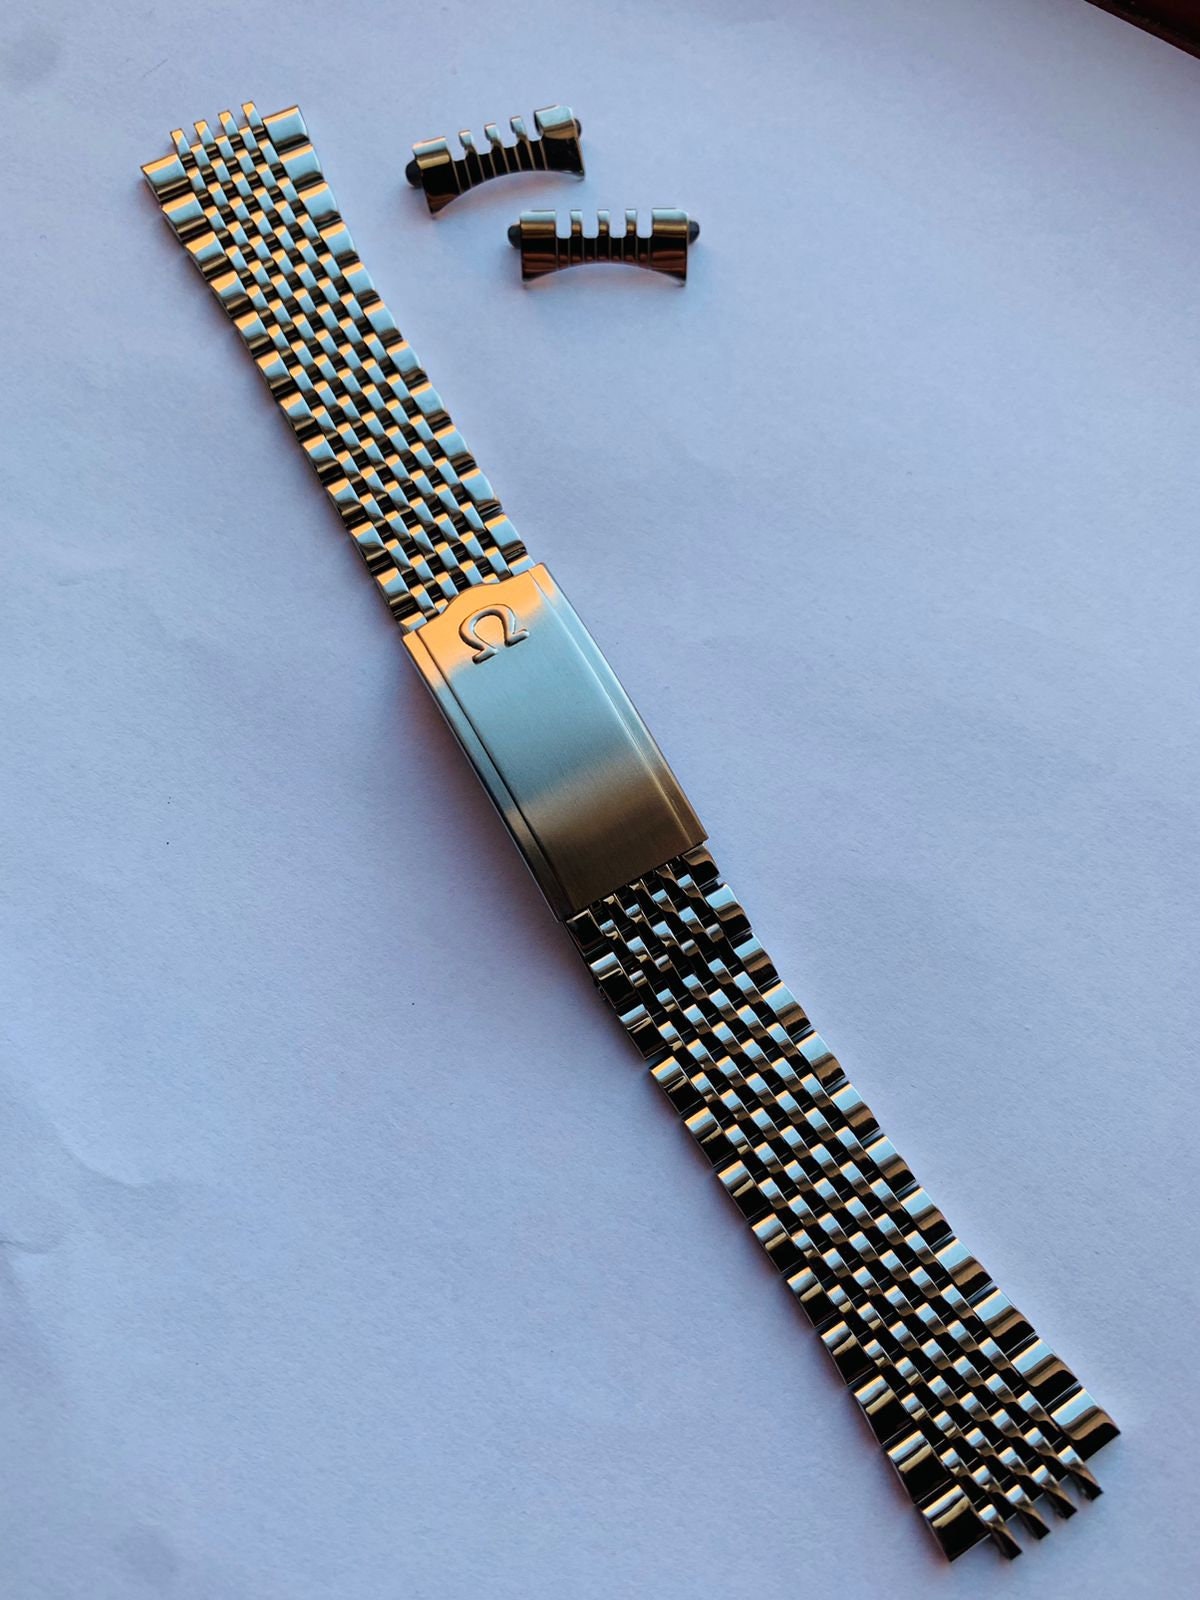 FS Omega 14k gf beads of rice bracelet with #527 end links